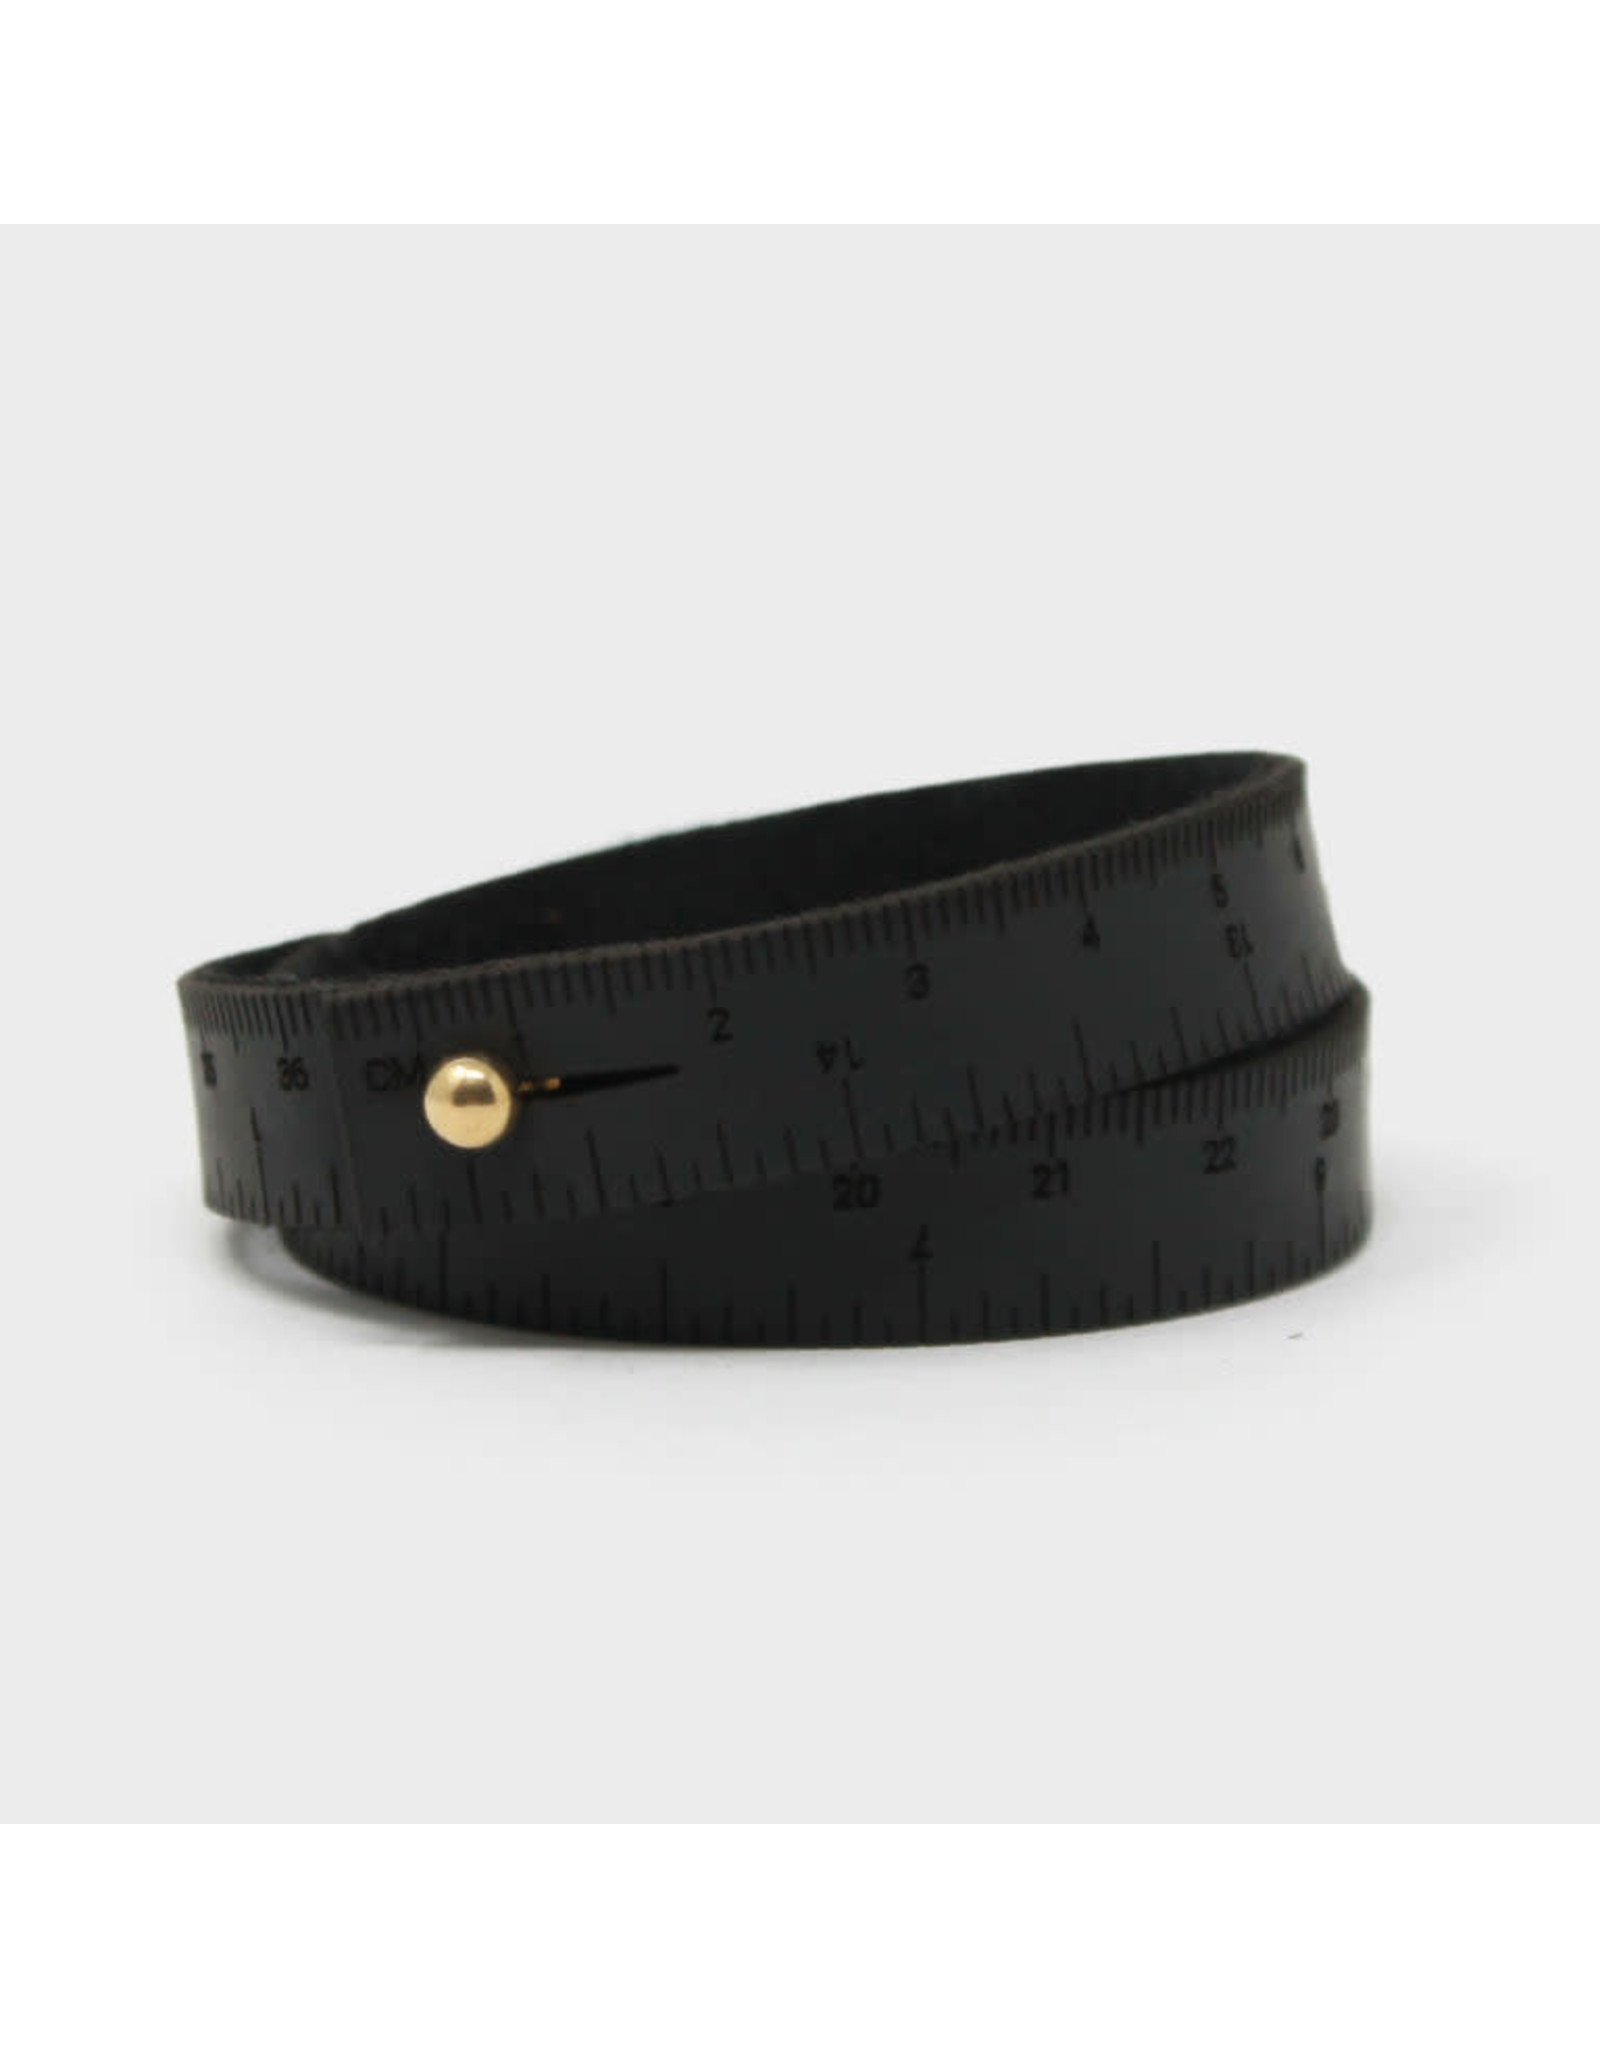 Wrist Ruler - BLACK - 16 inches